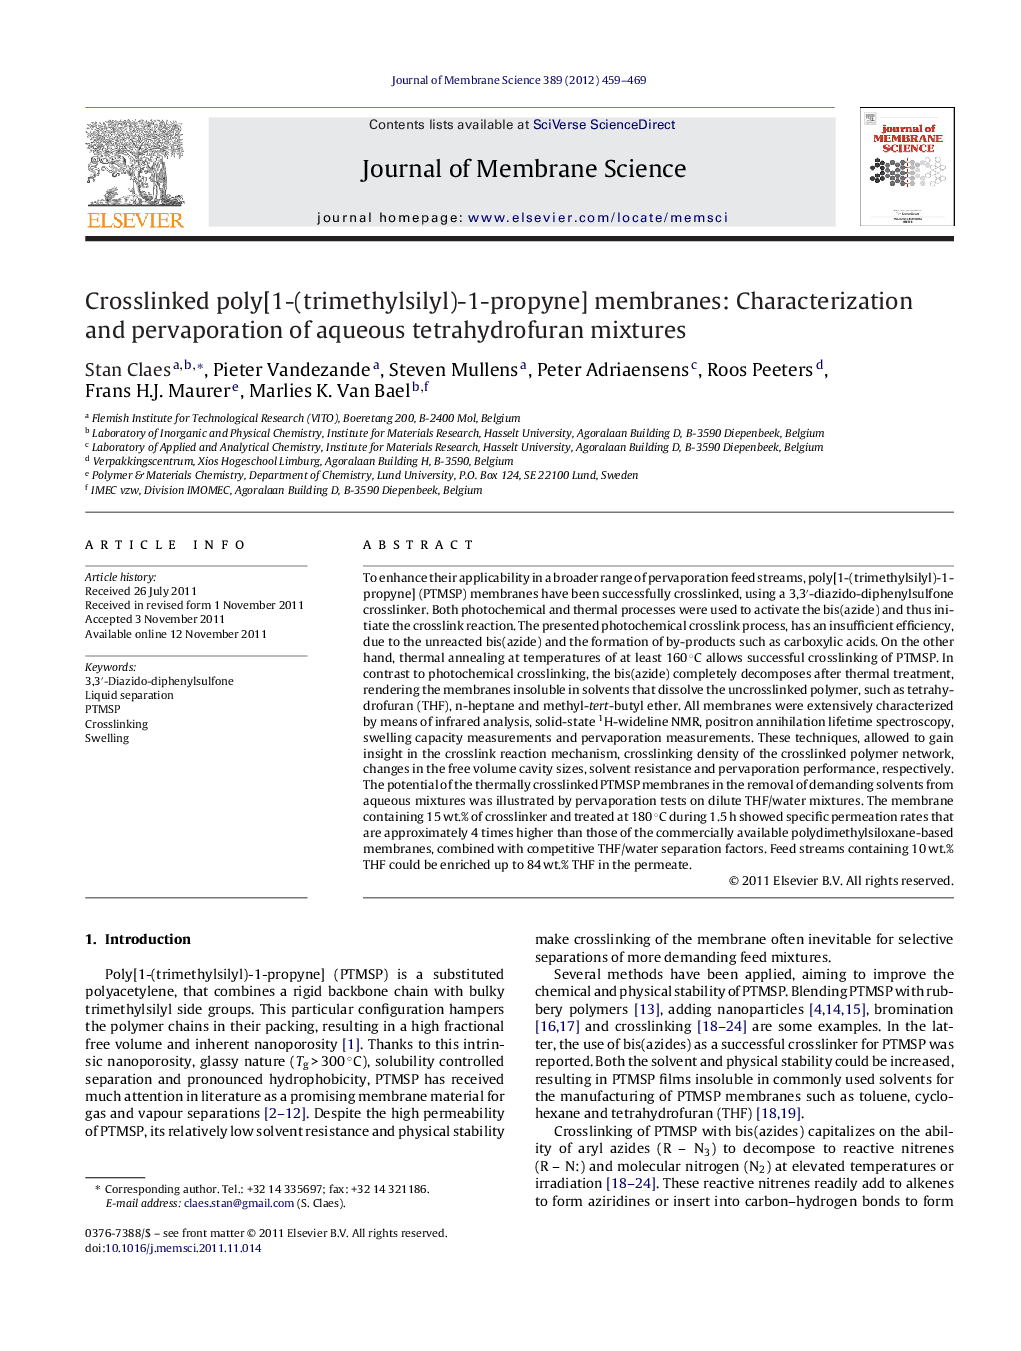 Crosslinked poly[1-(trimethylsilyl)-1-propyne] membranes: Characterization and pervaporation of aqueous tetrahydrofuran mixtures